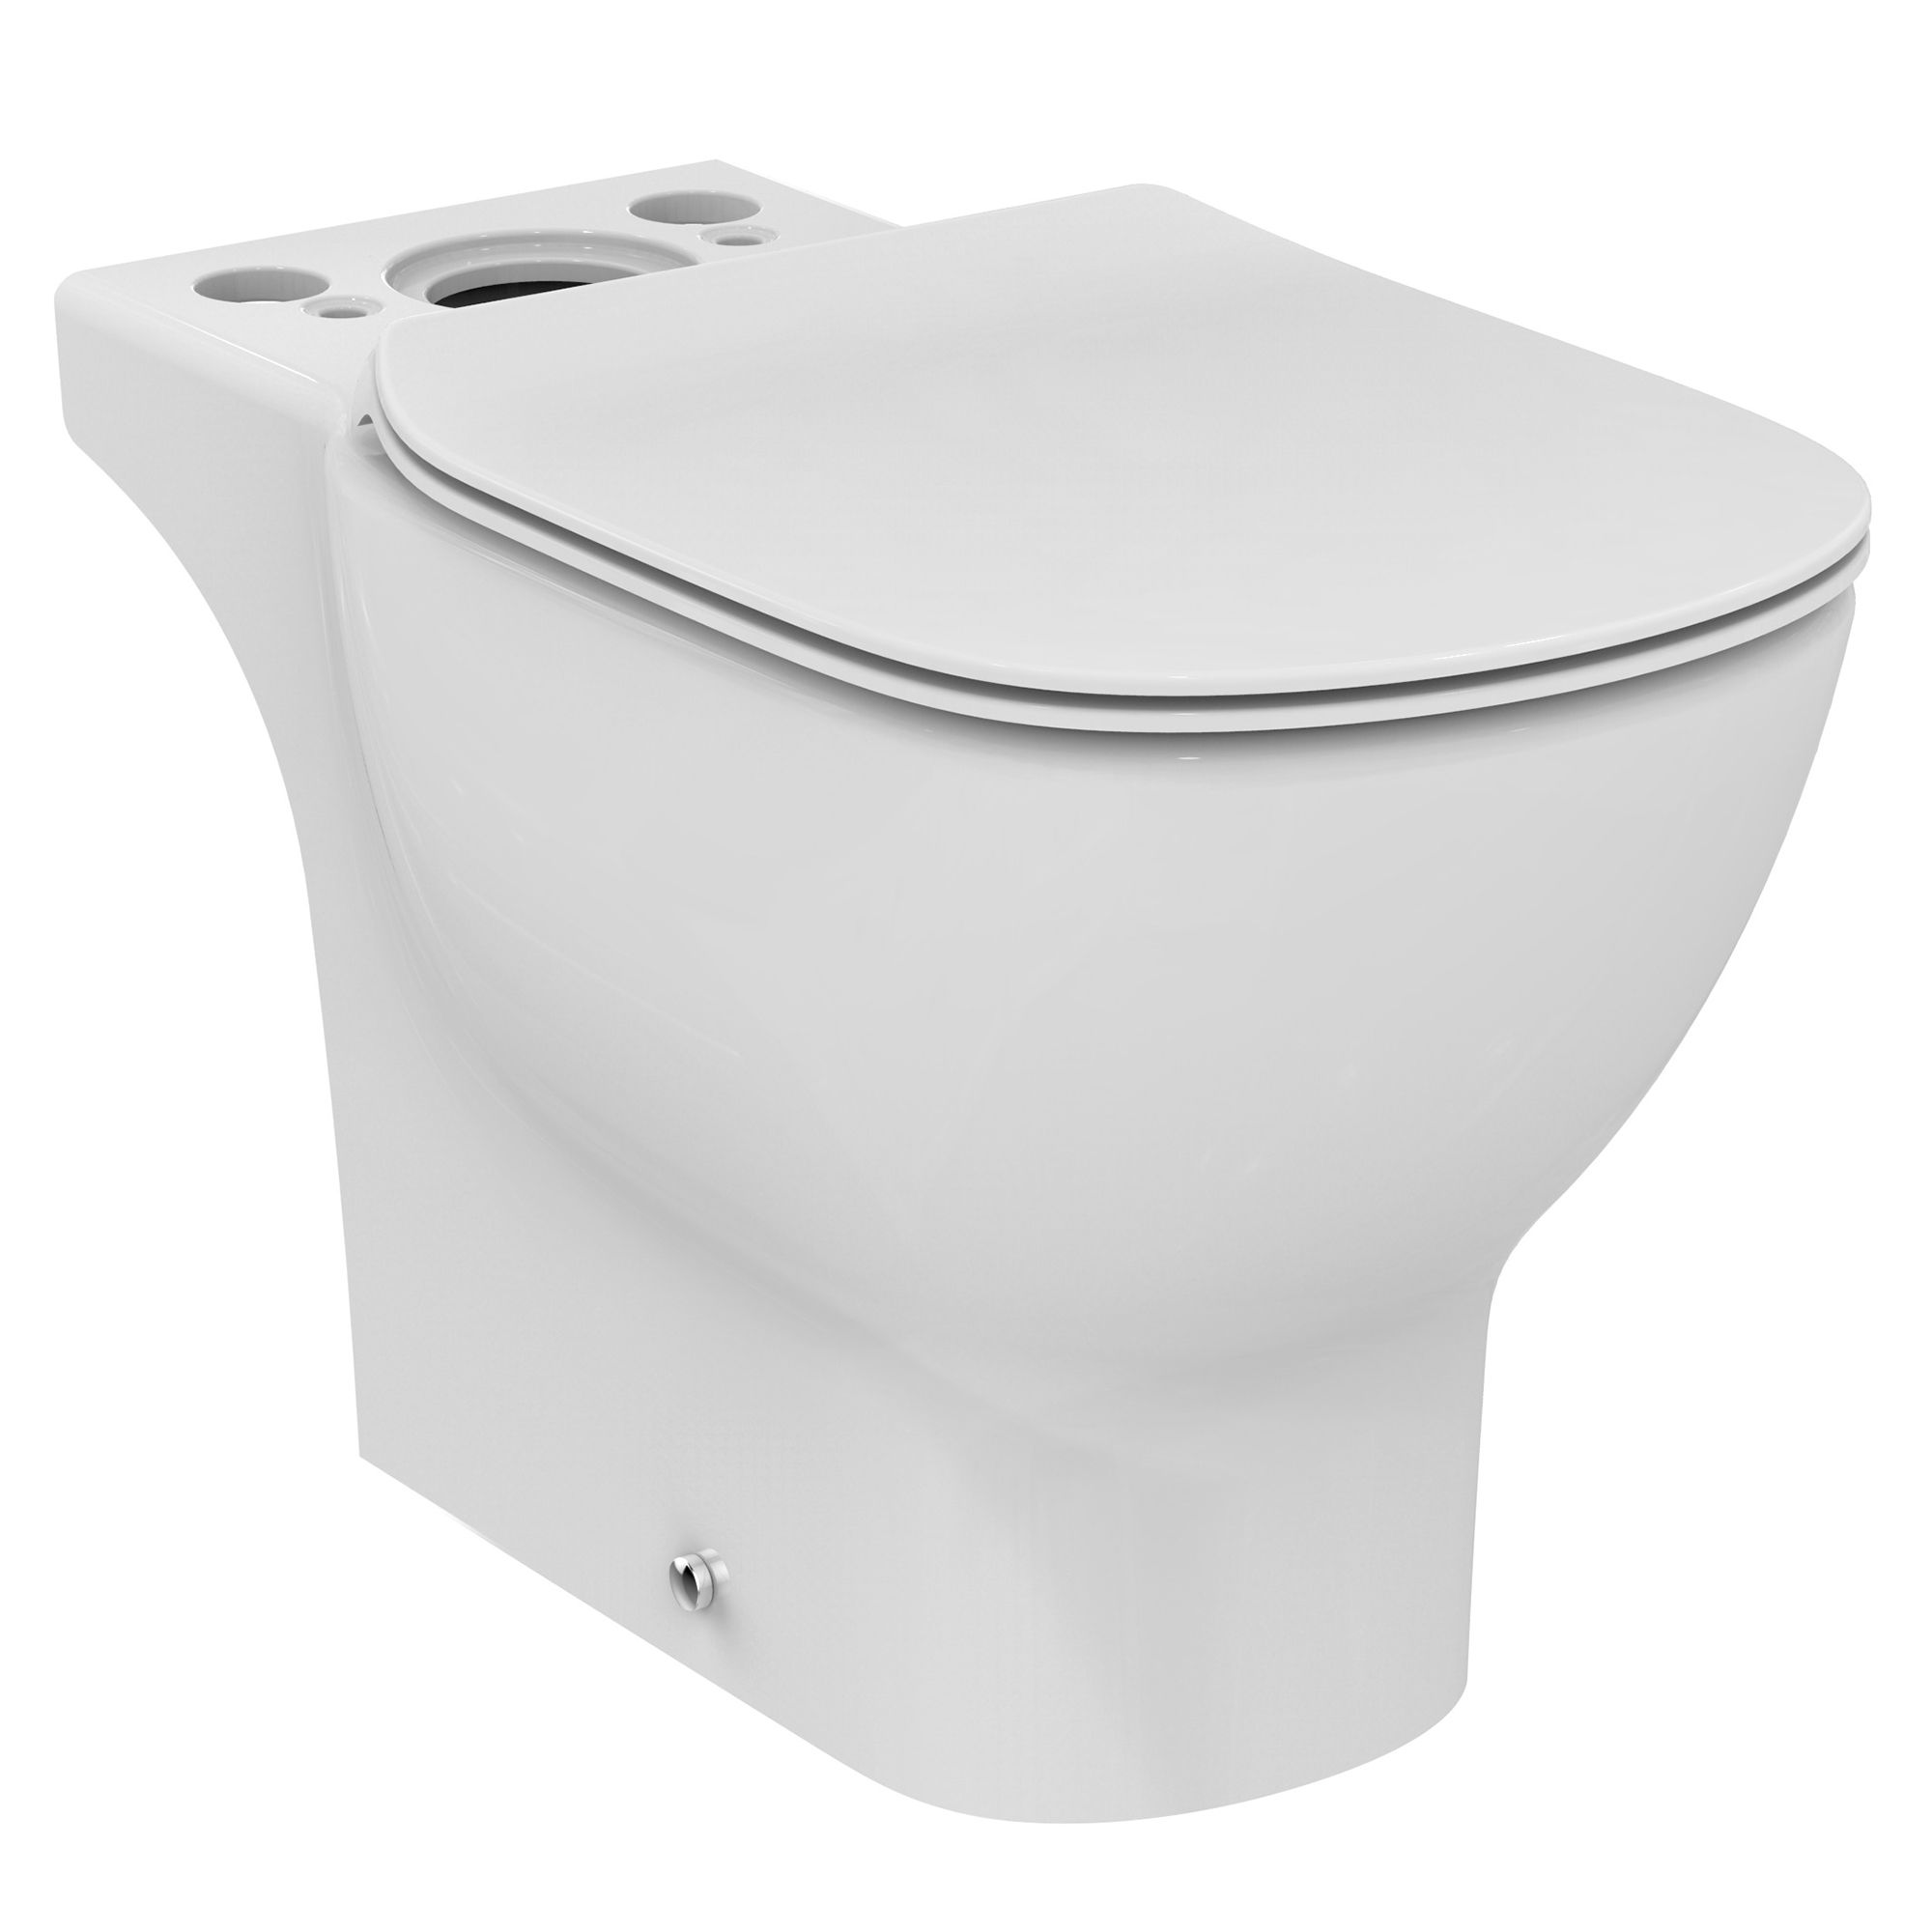 Toilette Ideal Standard S312801